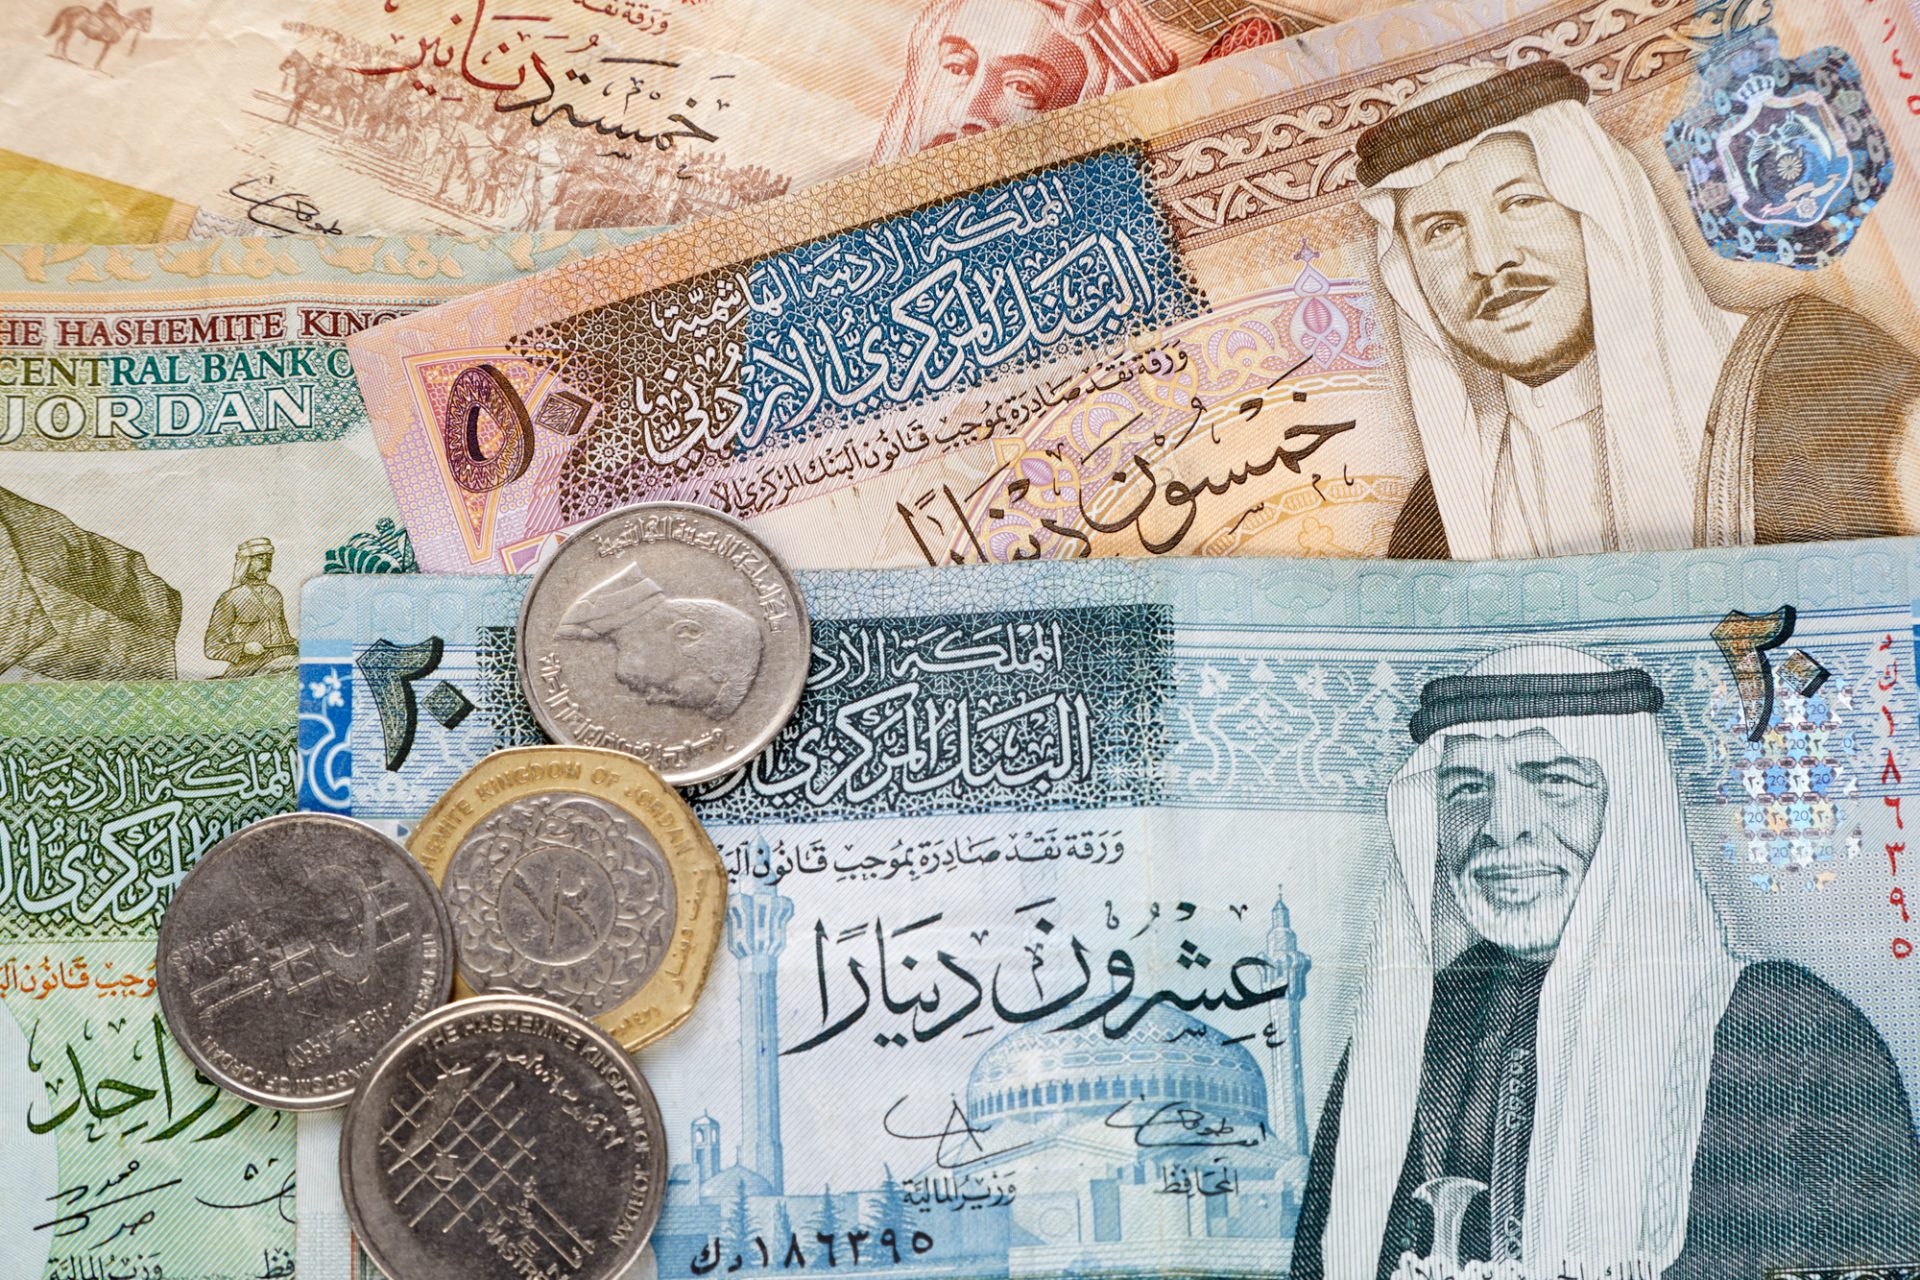 Jordanian Dinar – (1 JOD = 1.41 USD)